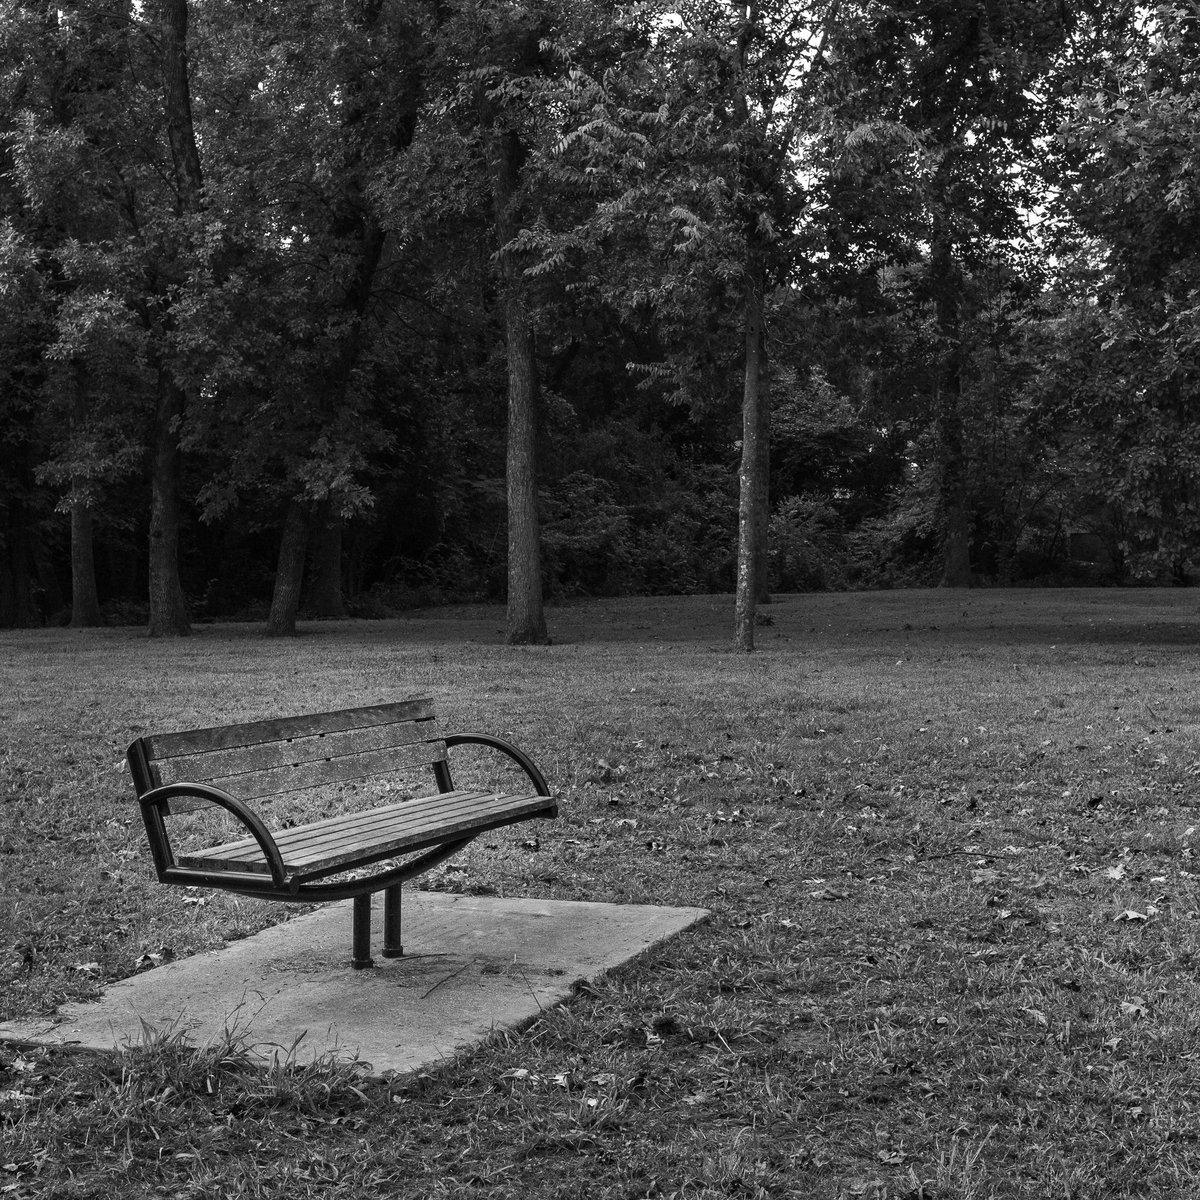 Open Seating, Dallas … Oct 2020

#blackandwhitephotography  #monochrome
#streetphotography  
#Canonrp
#voigtlander35mmf14